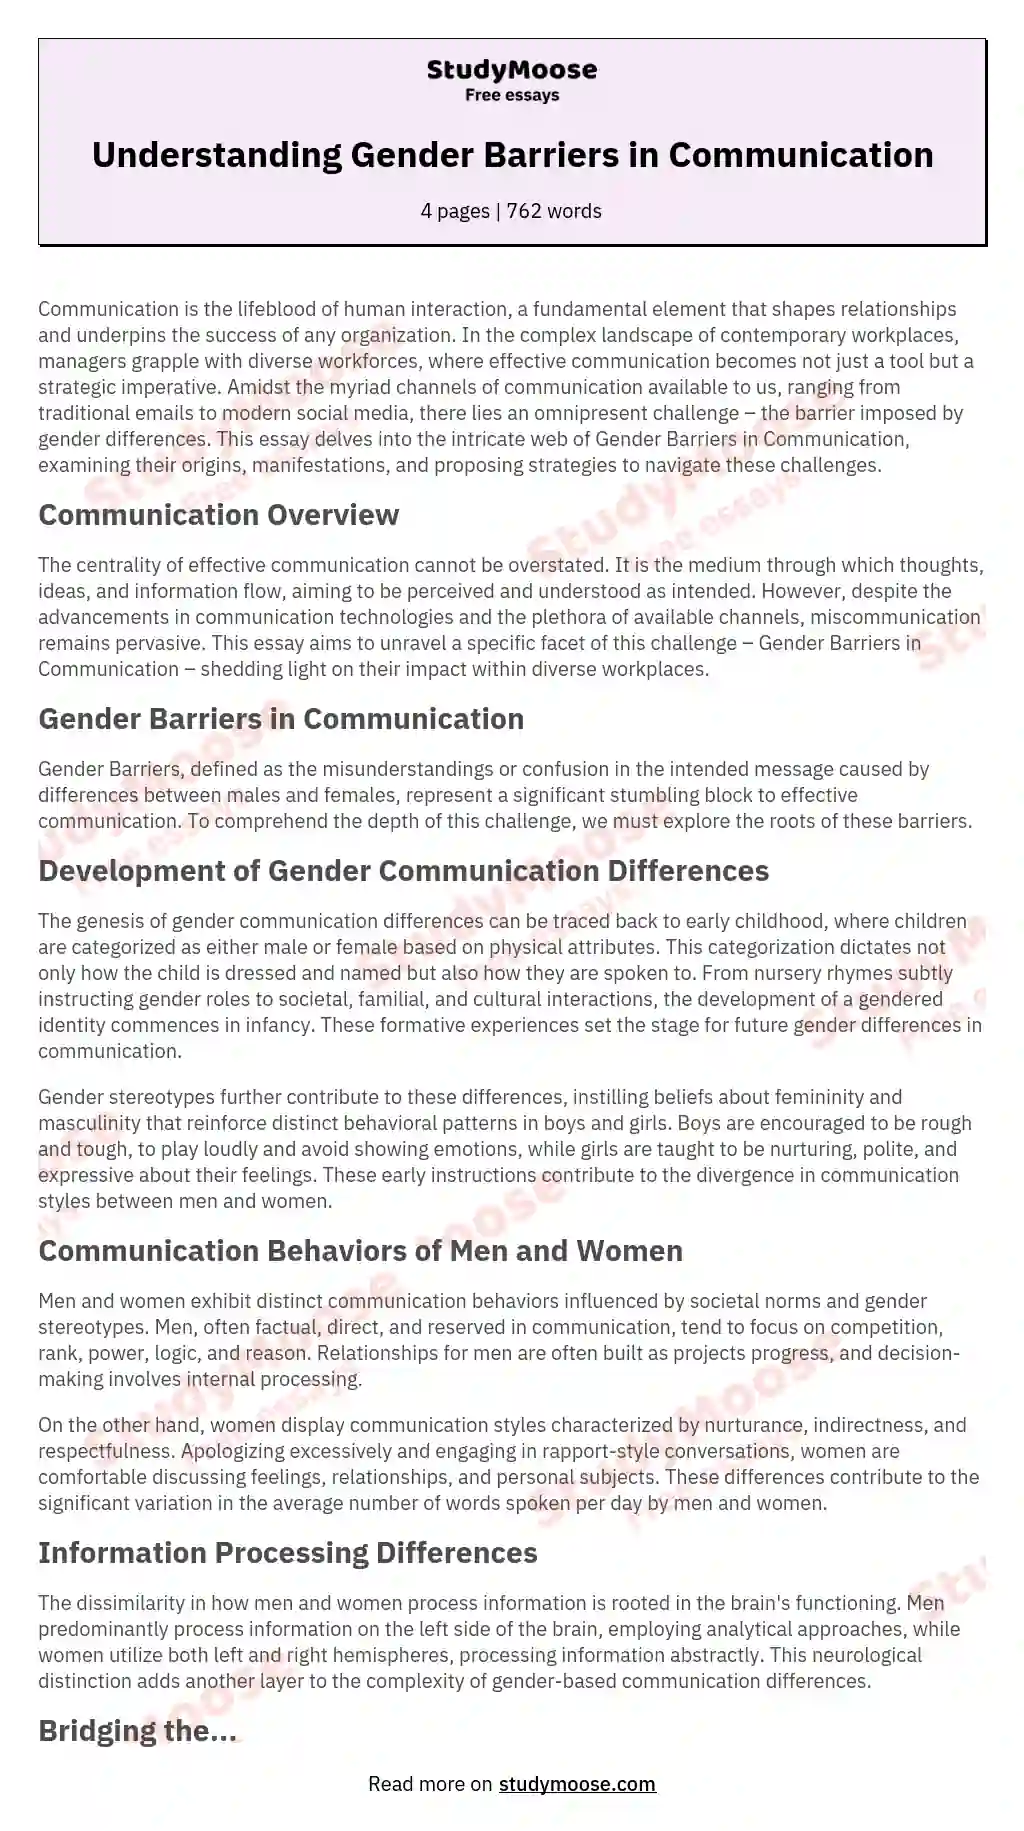 Understanding Gender Barriers in Communication essay